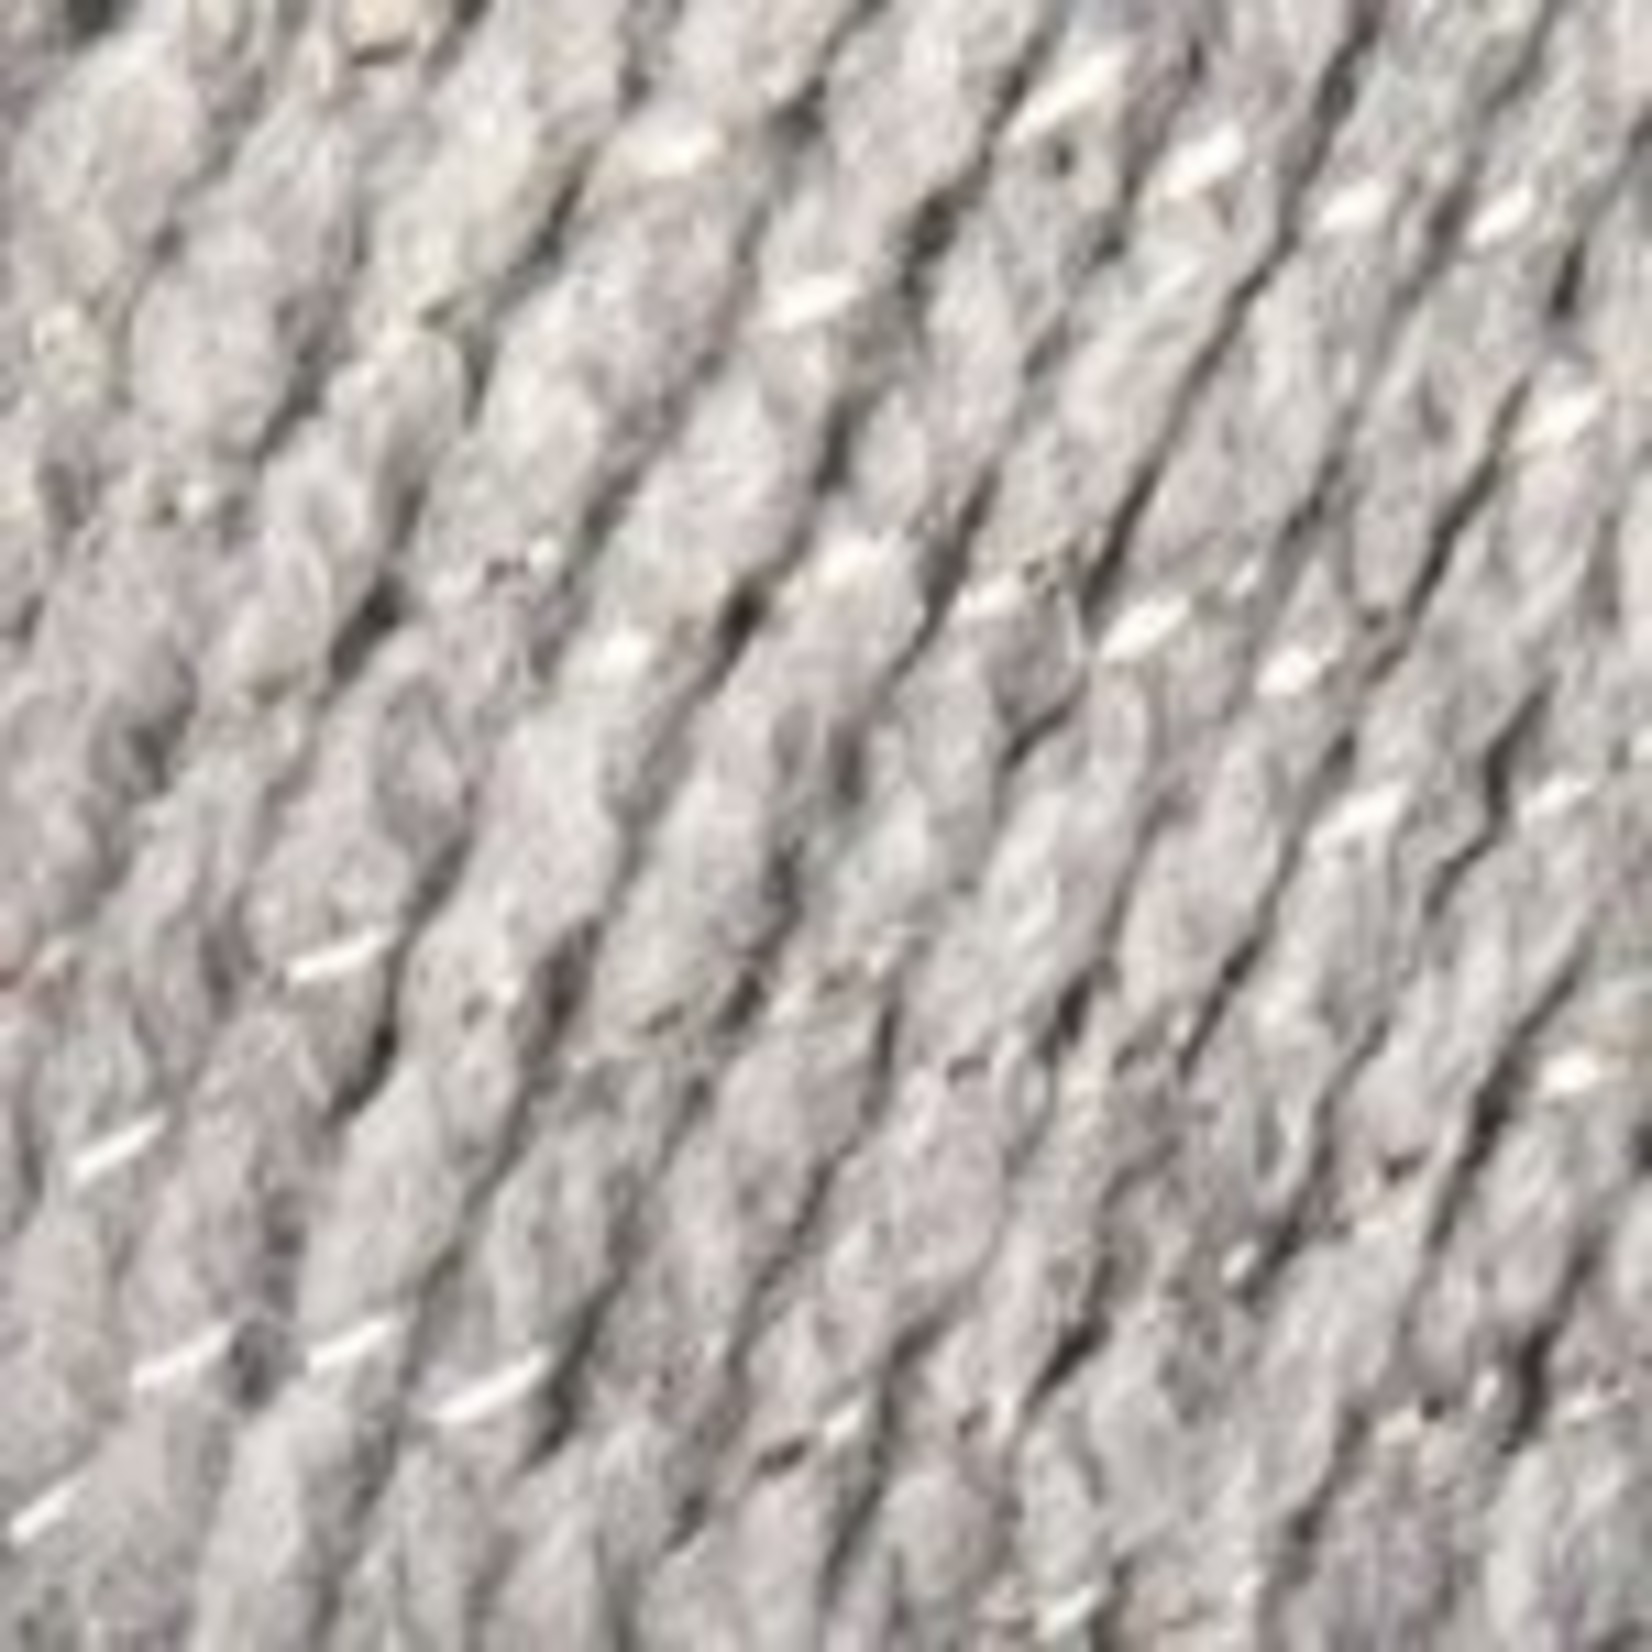 DMC Knitty 4 Glitter 226 Lichtgrijs